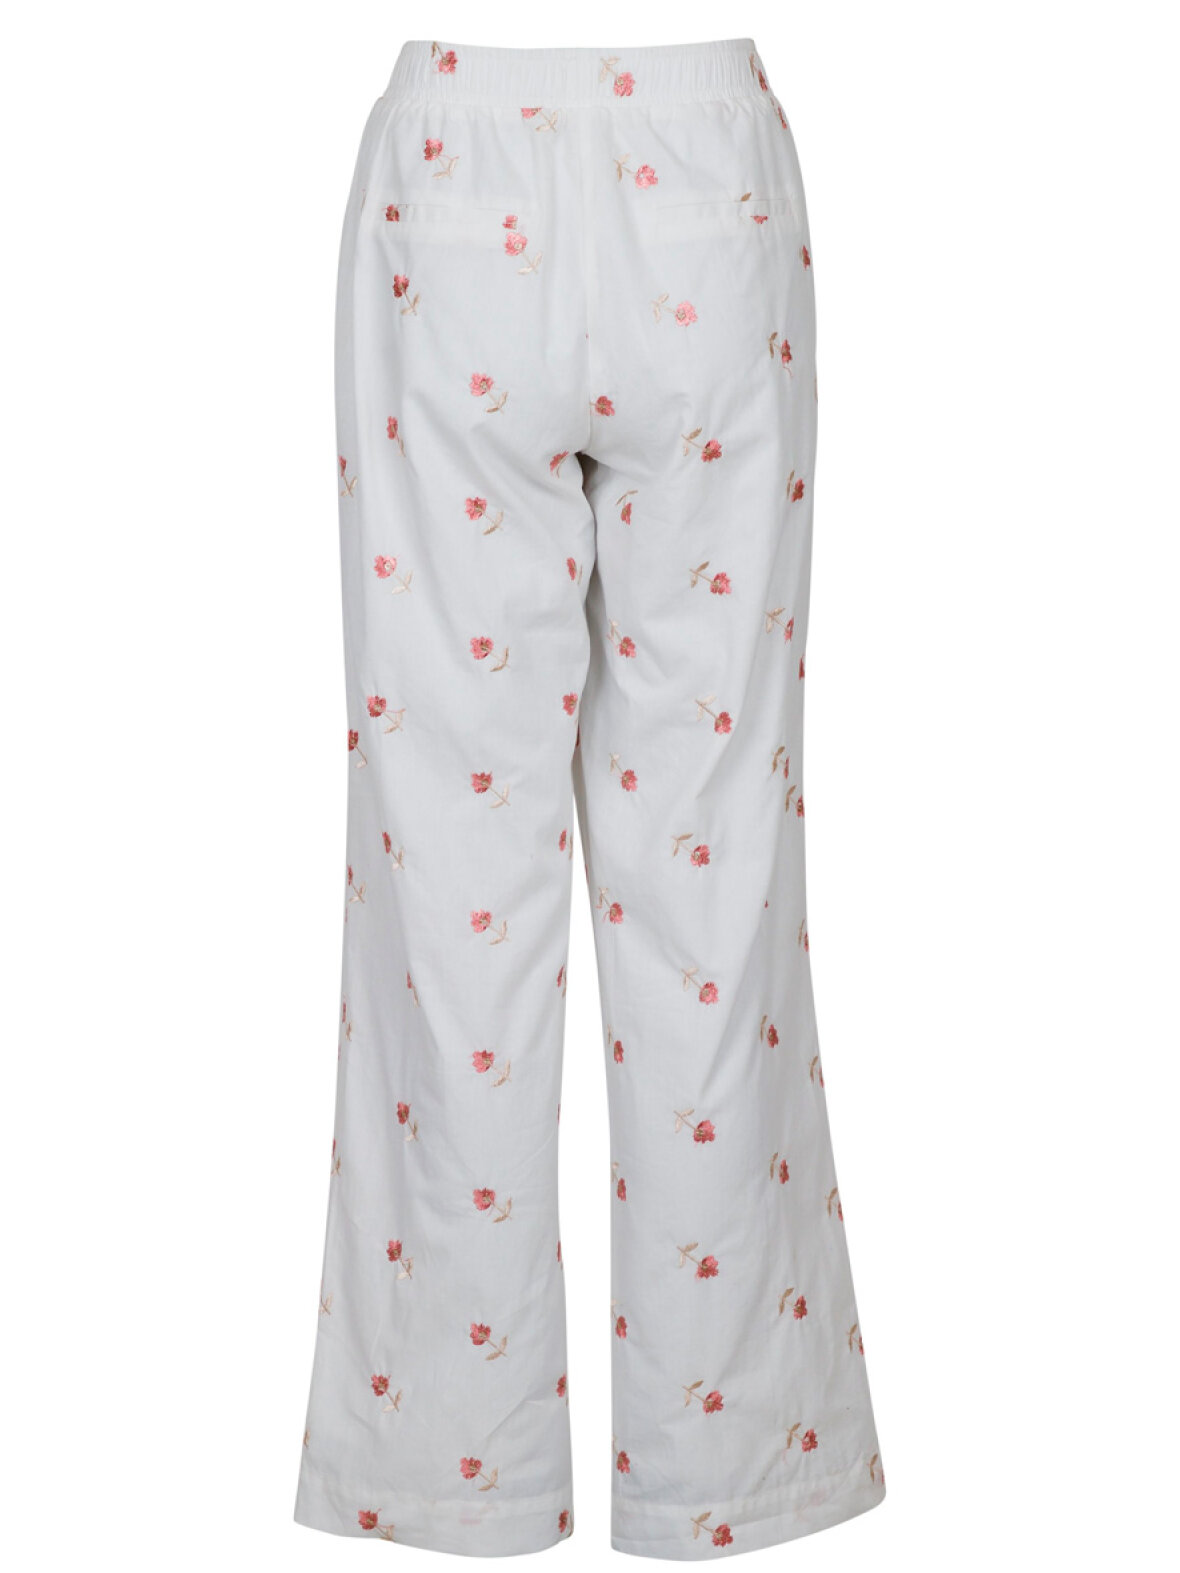 lugt Siesta Opfattelse A'POKE - Neo Noir Astra Rosy Pants White - Shop hvide bukser med broderi